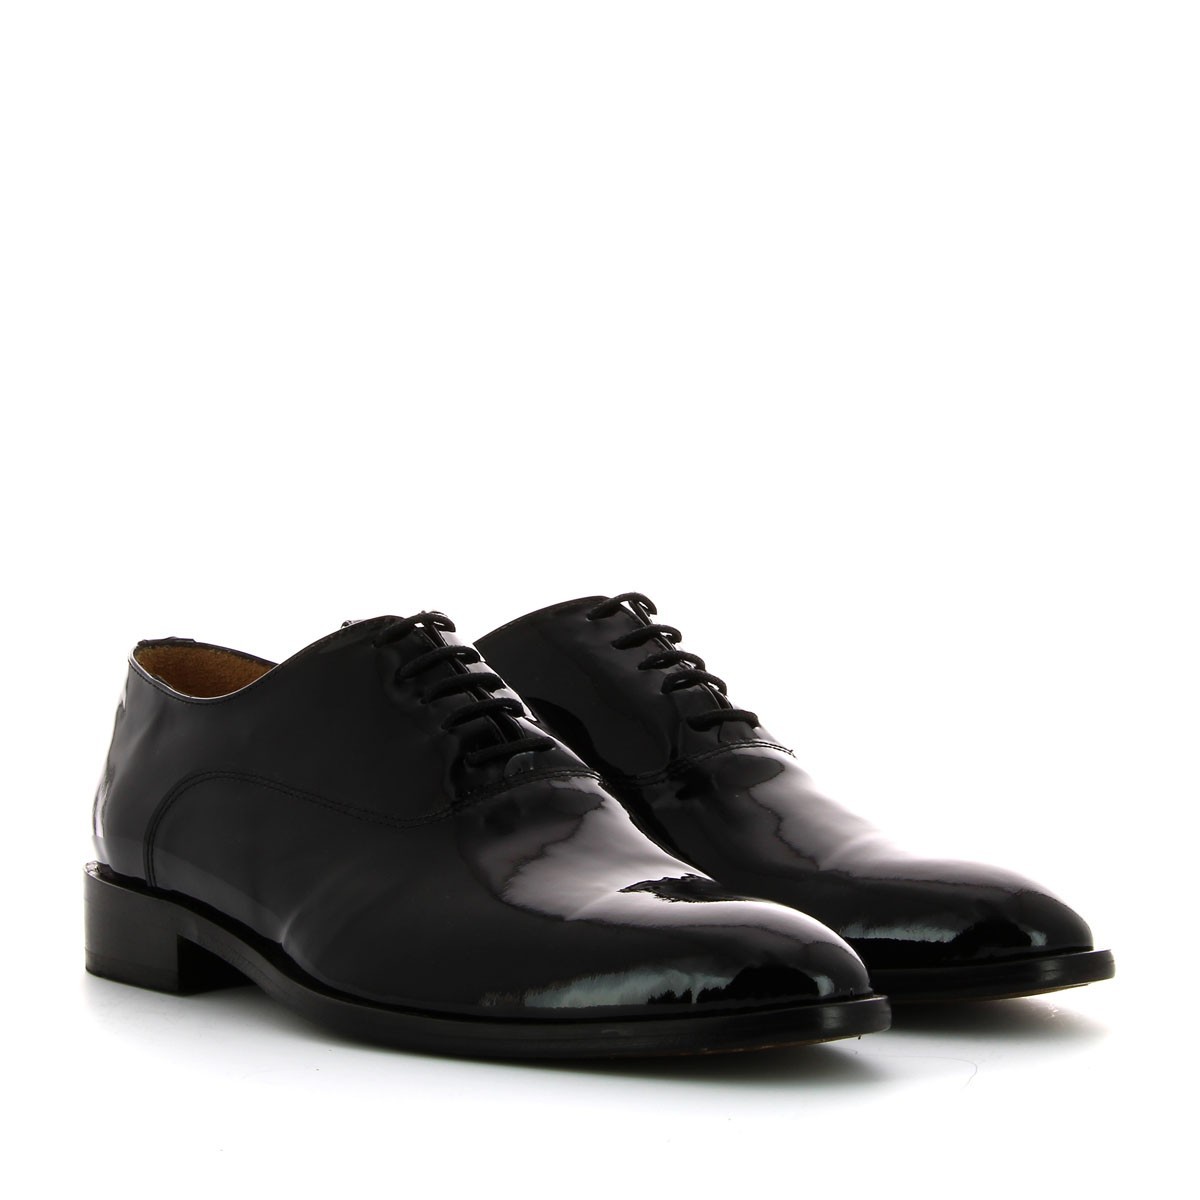 https://brunobernardo.pt/11523-large_default/chaussures-vernis-noir-homme-bruber.jpg